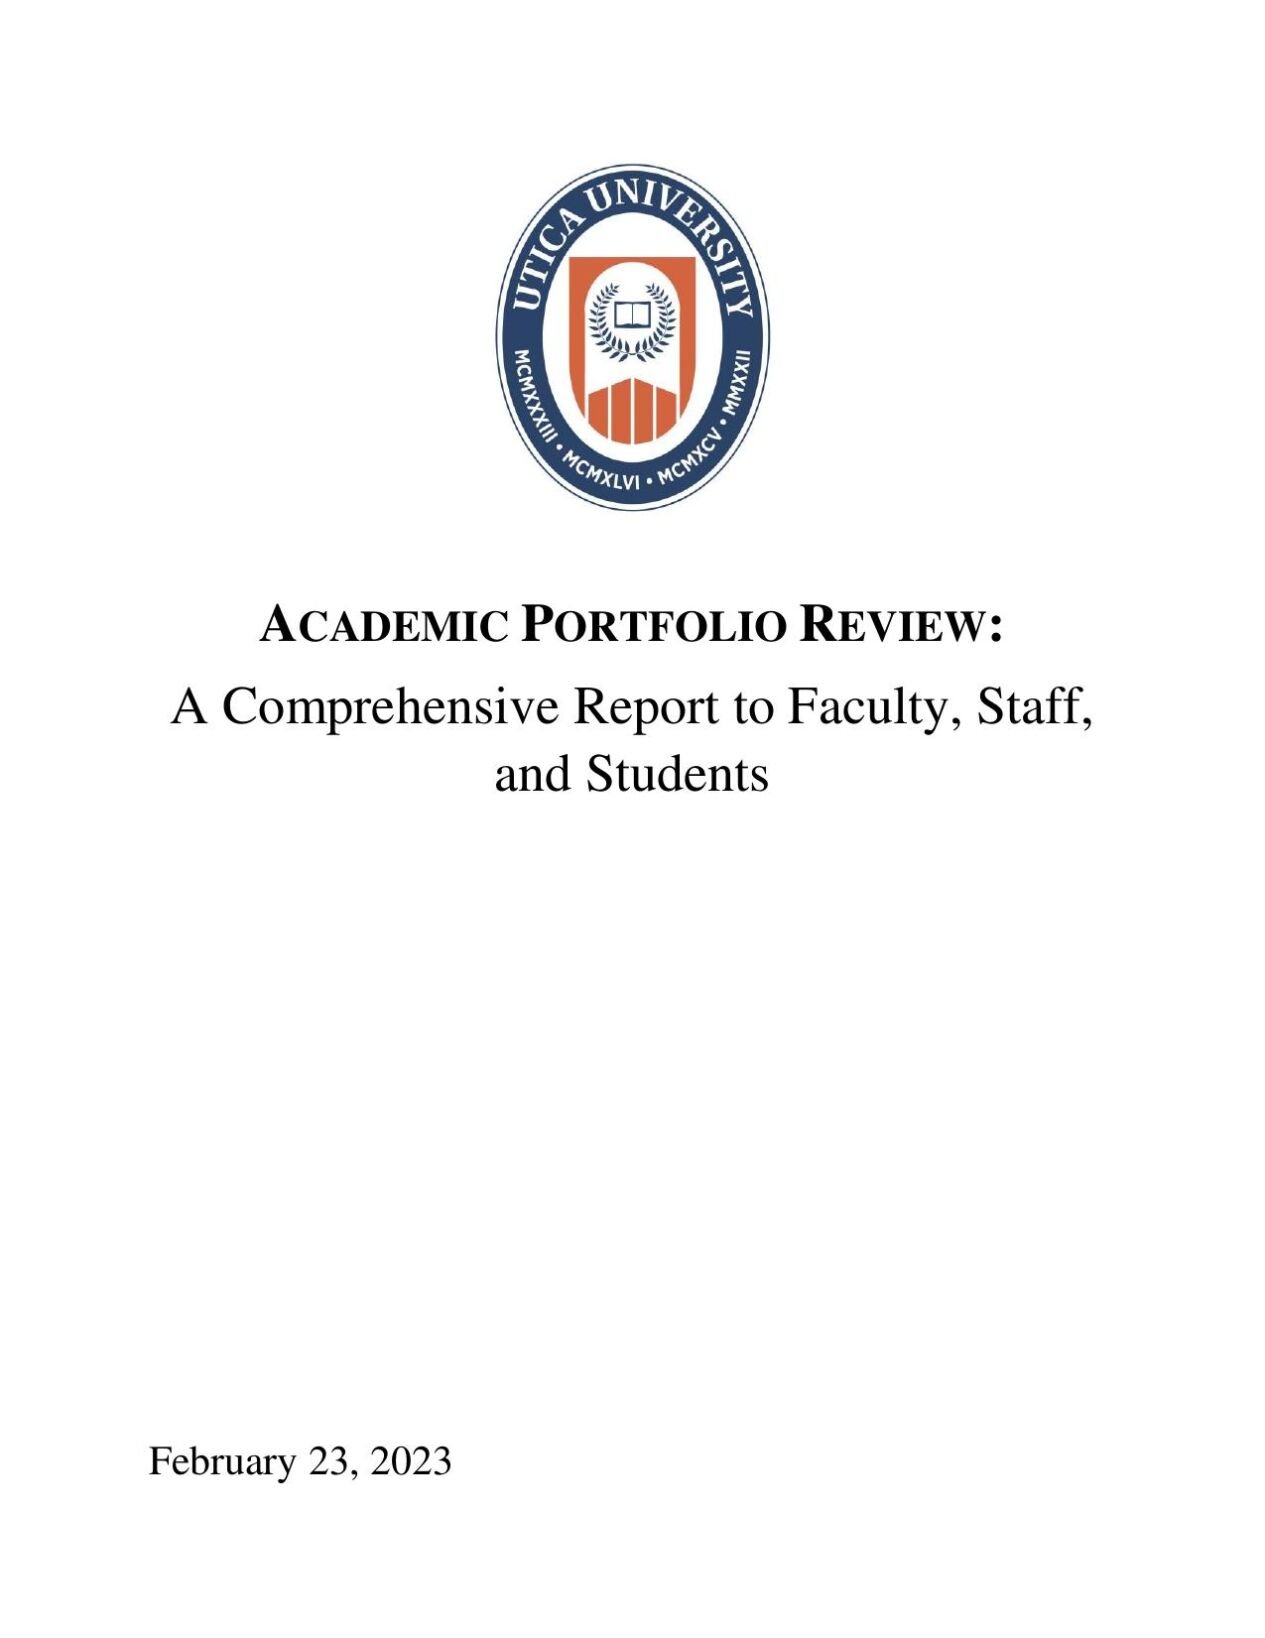 Utica University Academic Portfolio Review